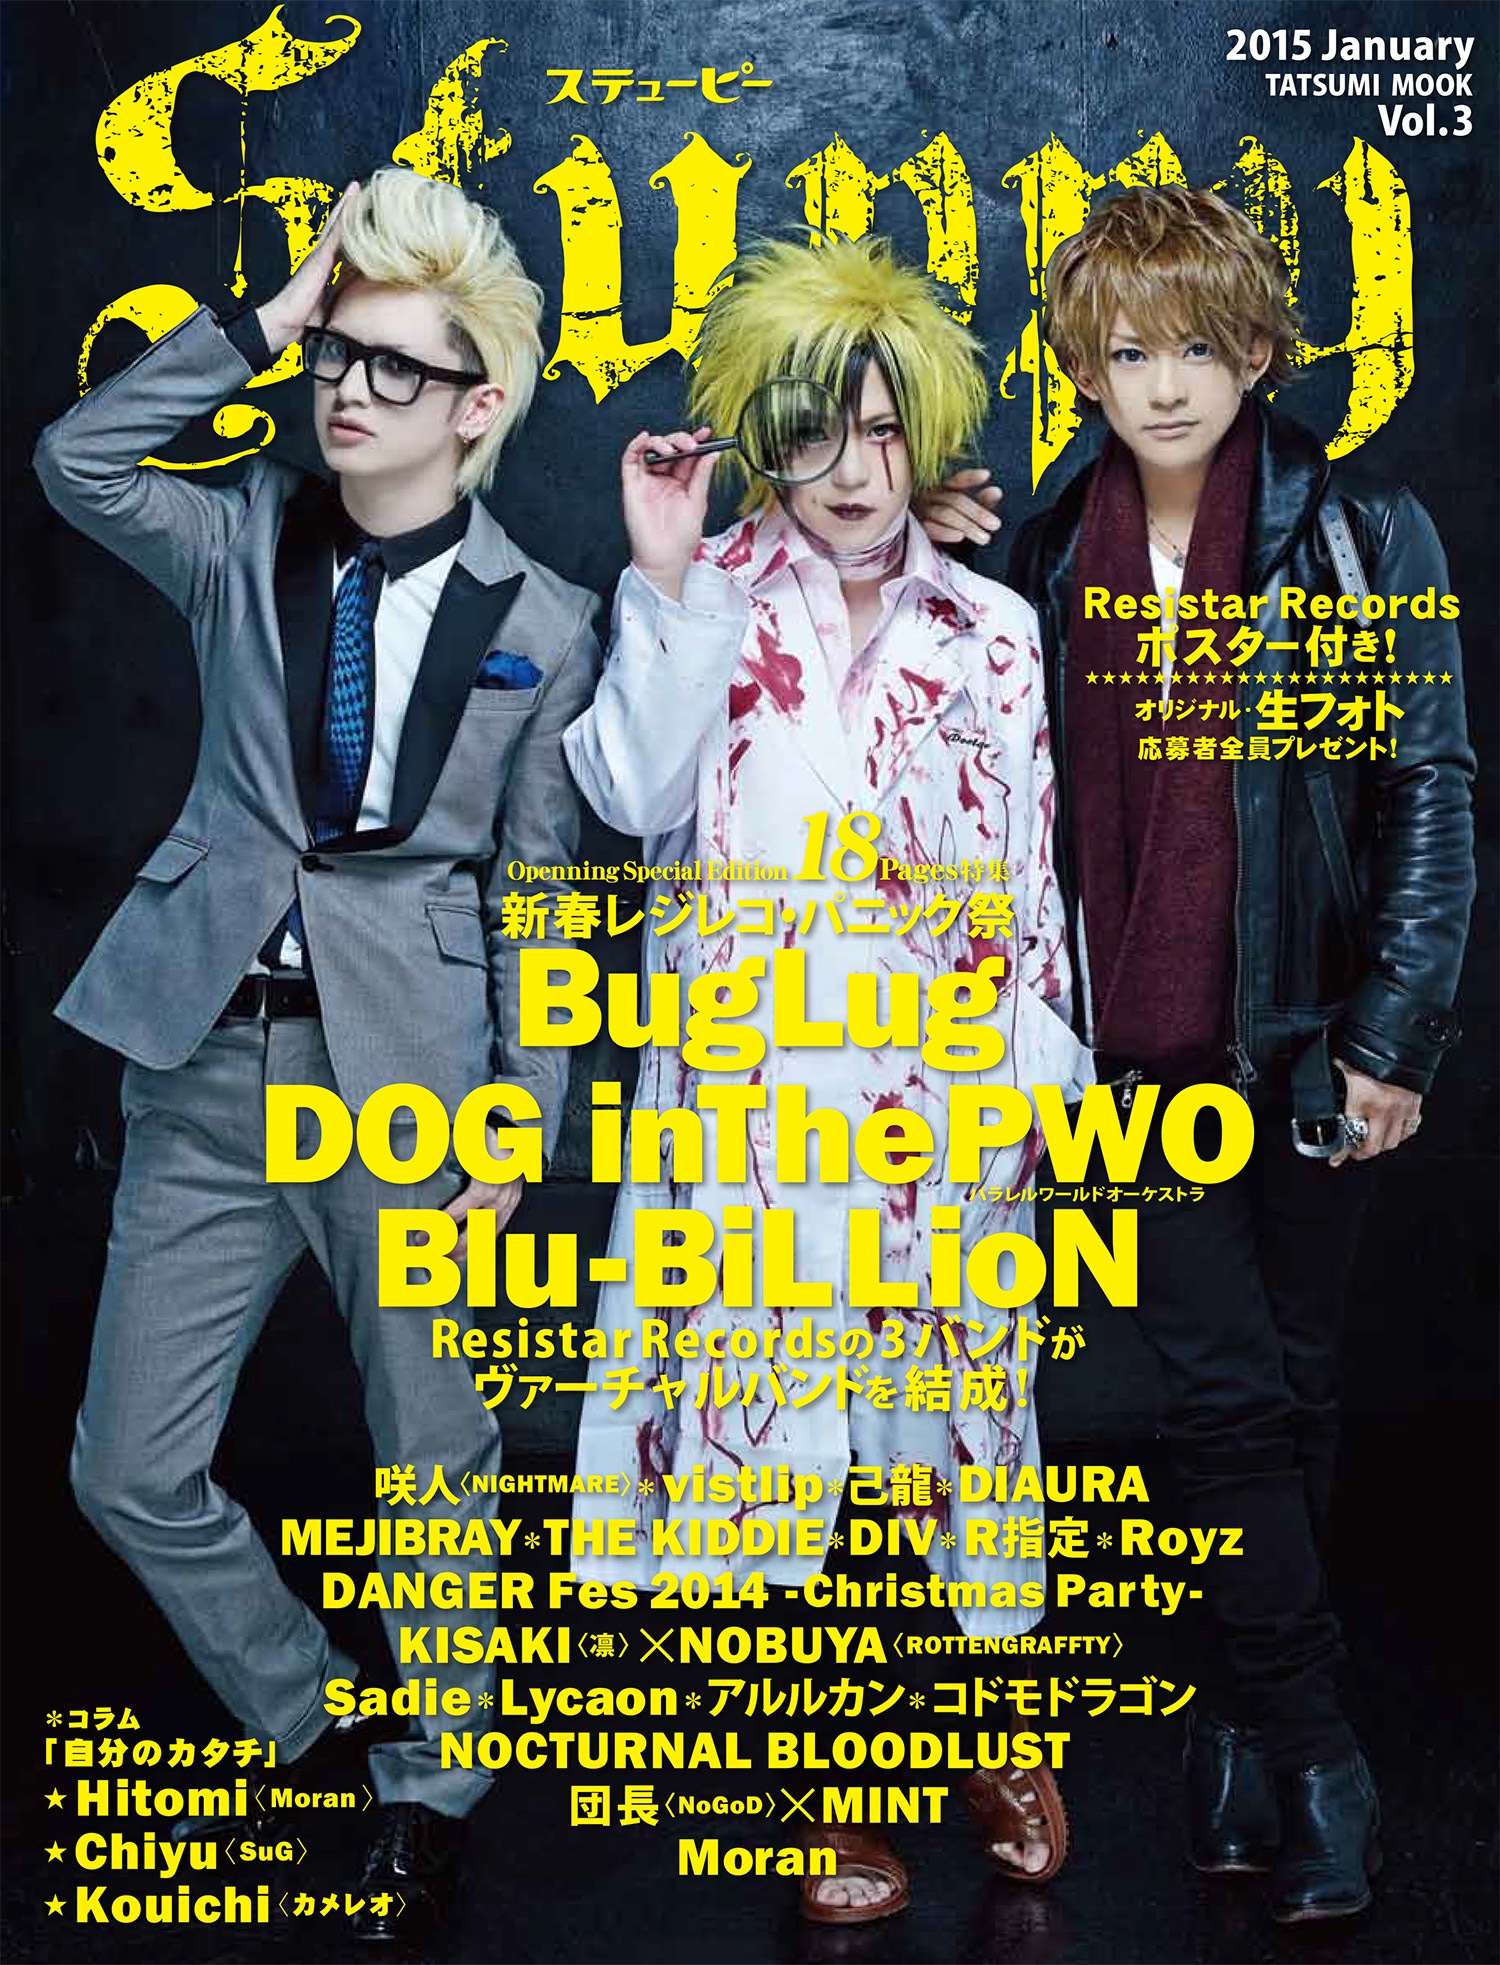 Dog Inthepwo Buglug Blu Billion 人気v系3バンドが新バンドを結成 Rockの総合情報サイトvif